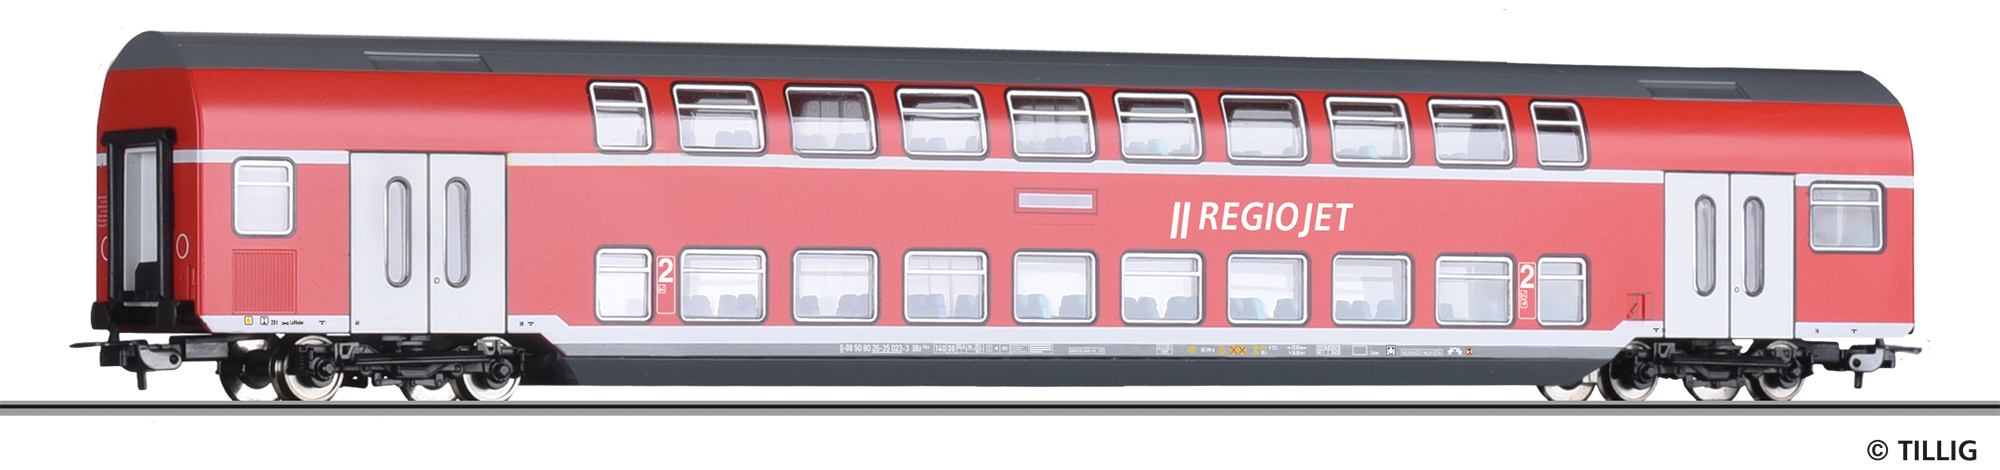 Regiojet DoSto Wagen rot Ep6 2. Klasse, Gattung DBz750